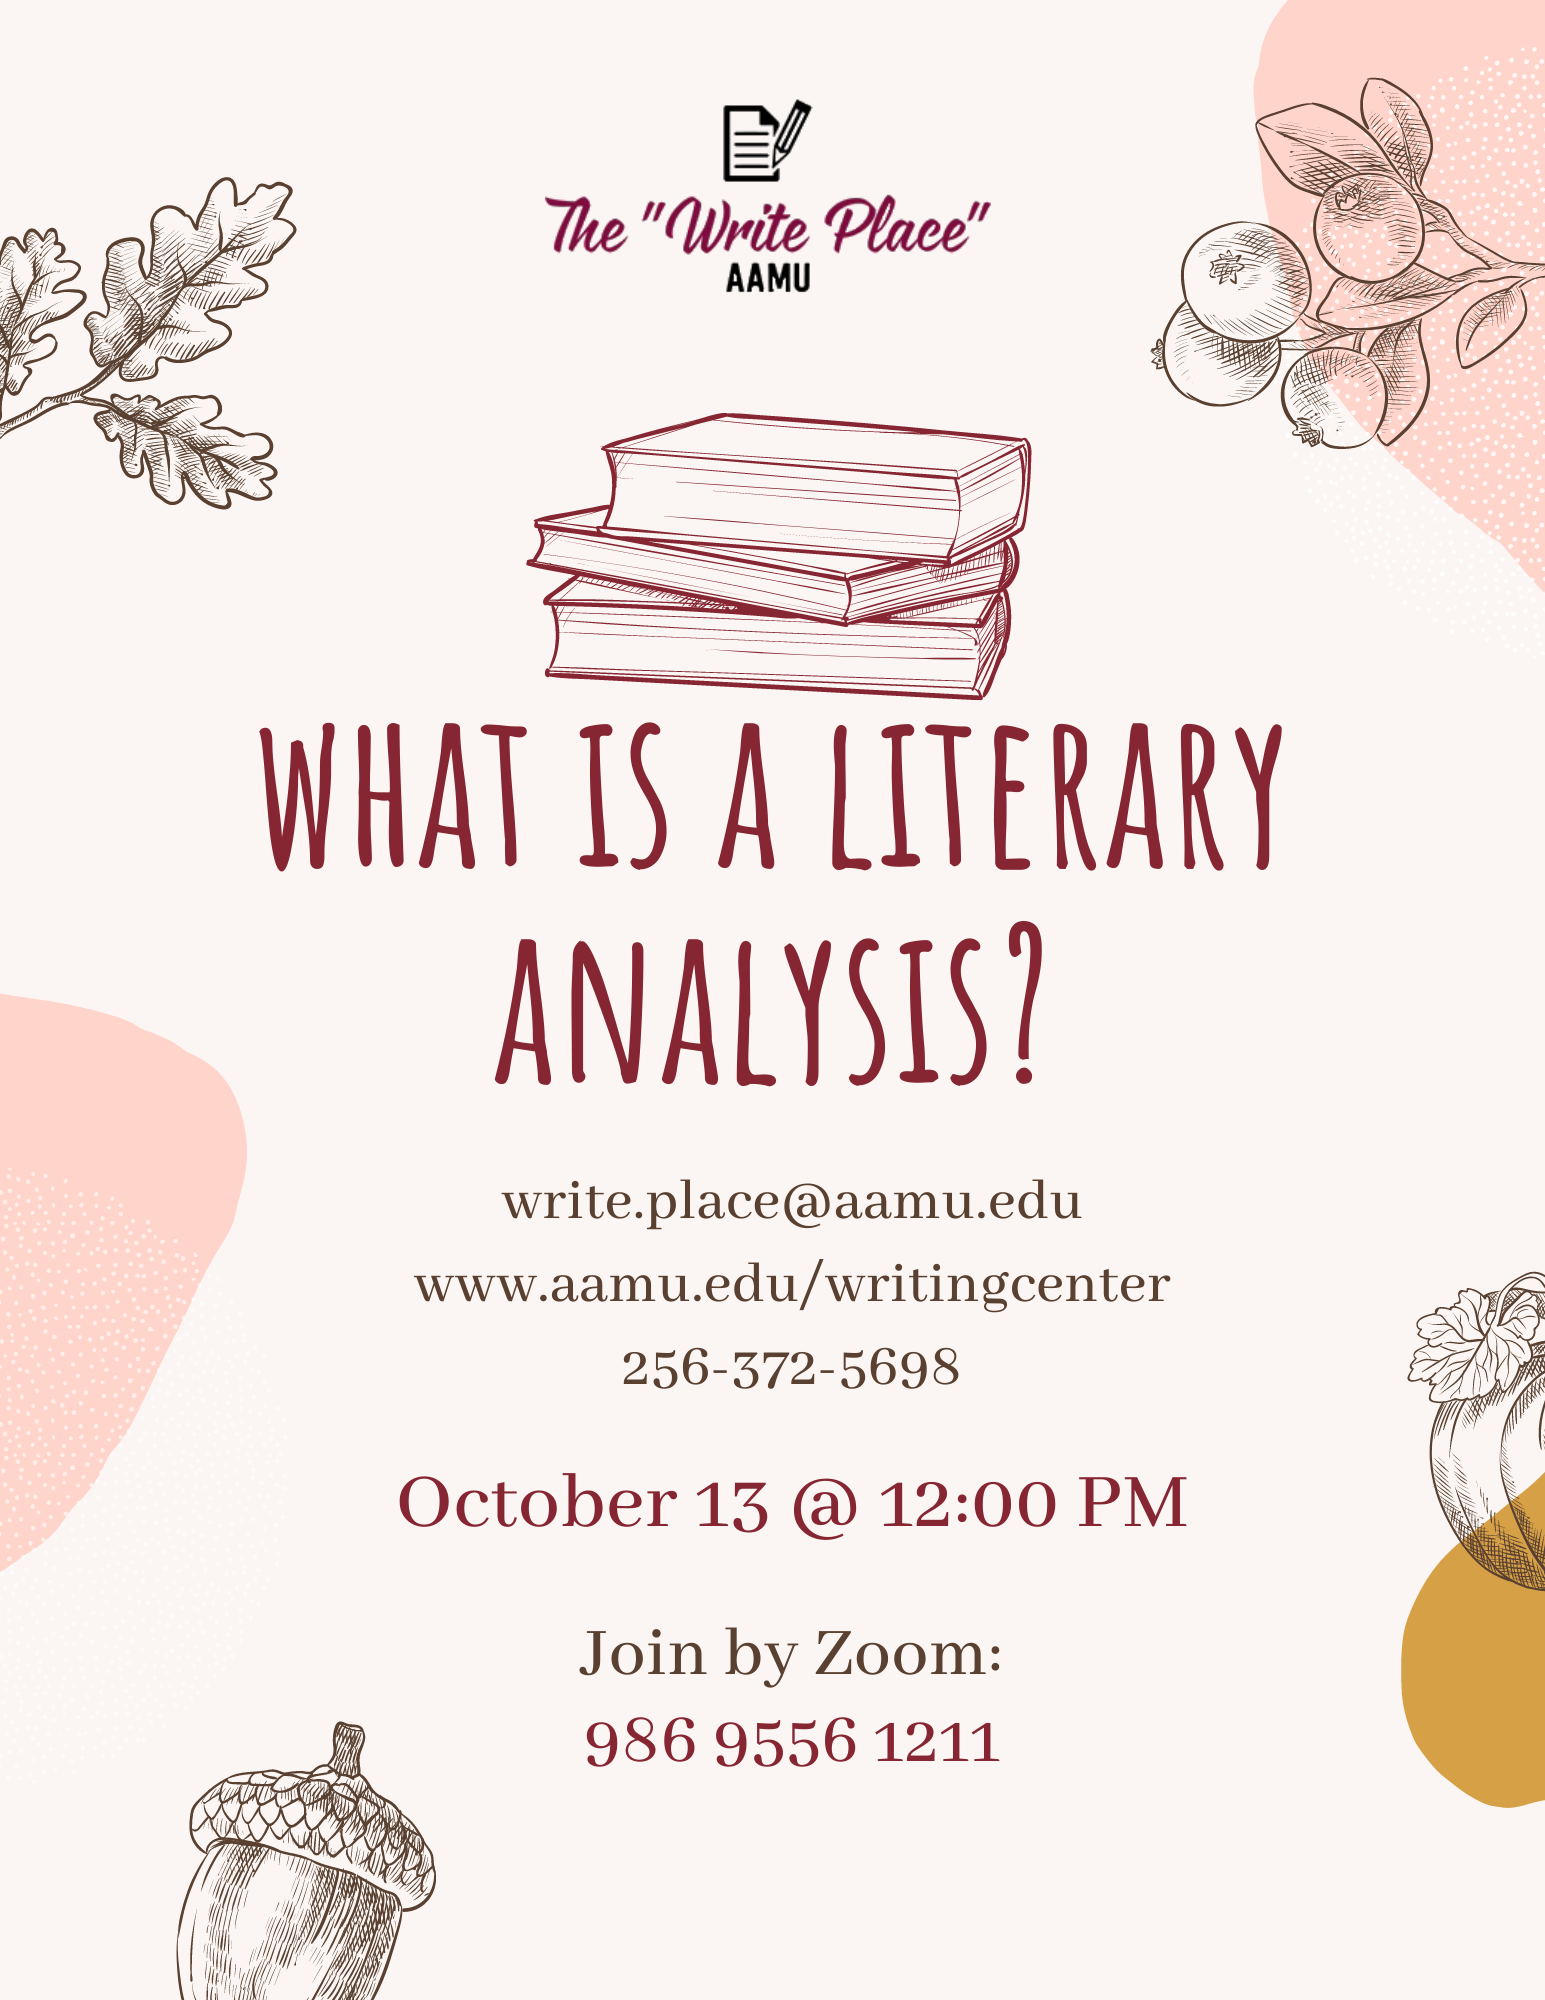 How to Write Literary Analysis - AAMU Calendar